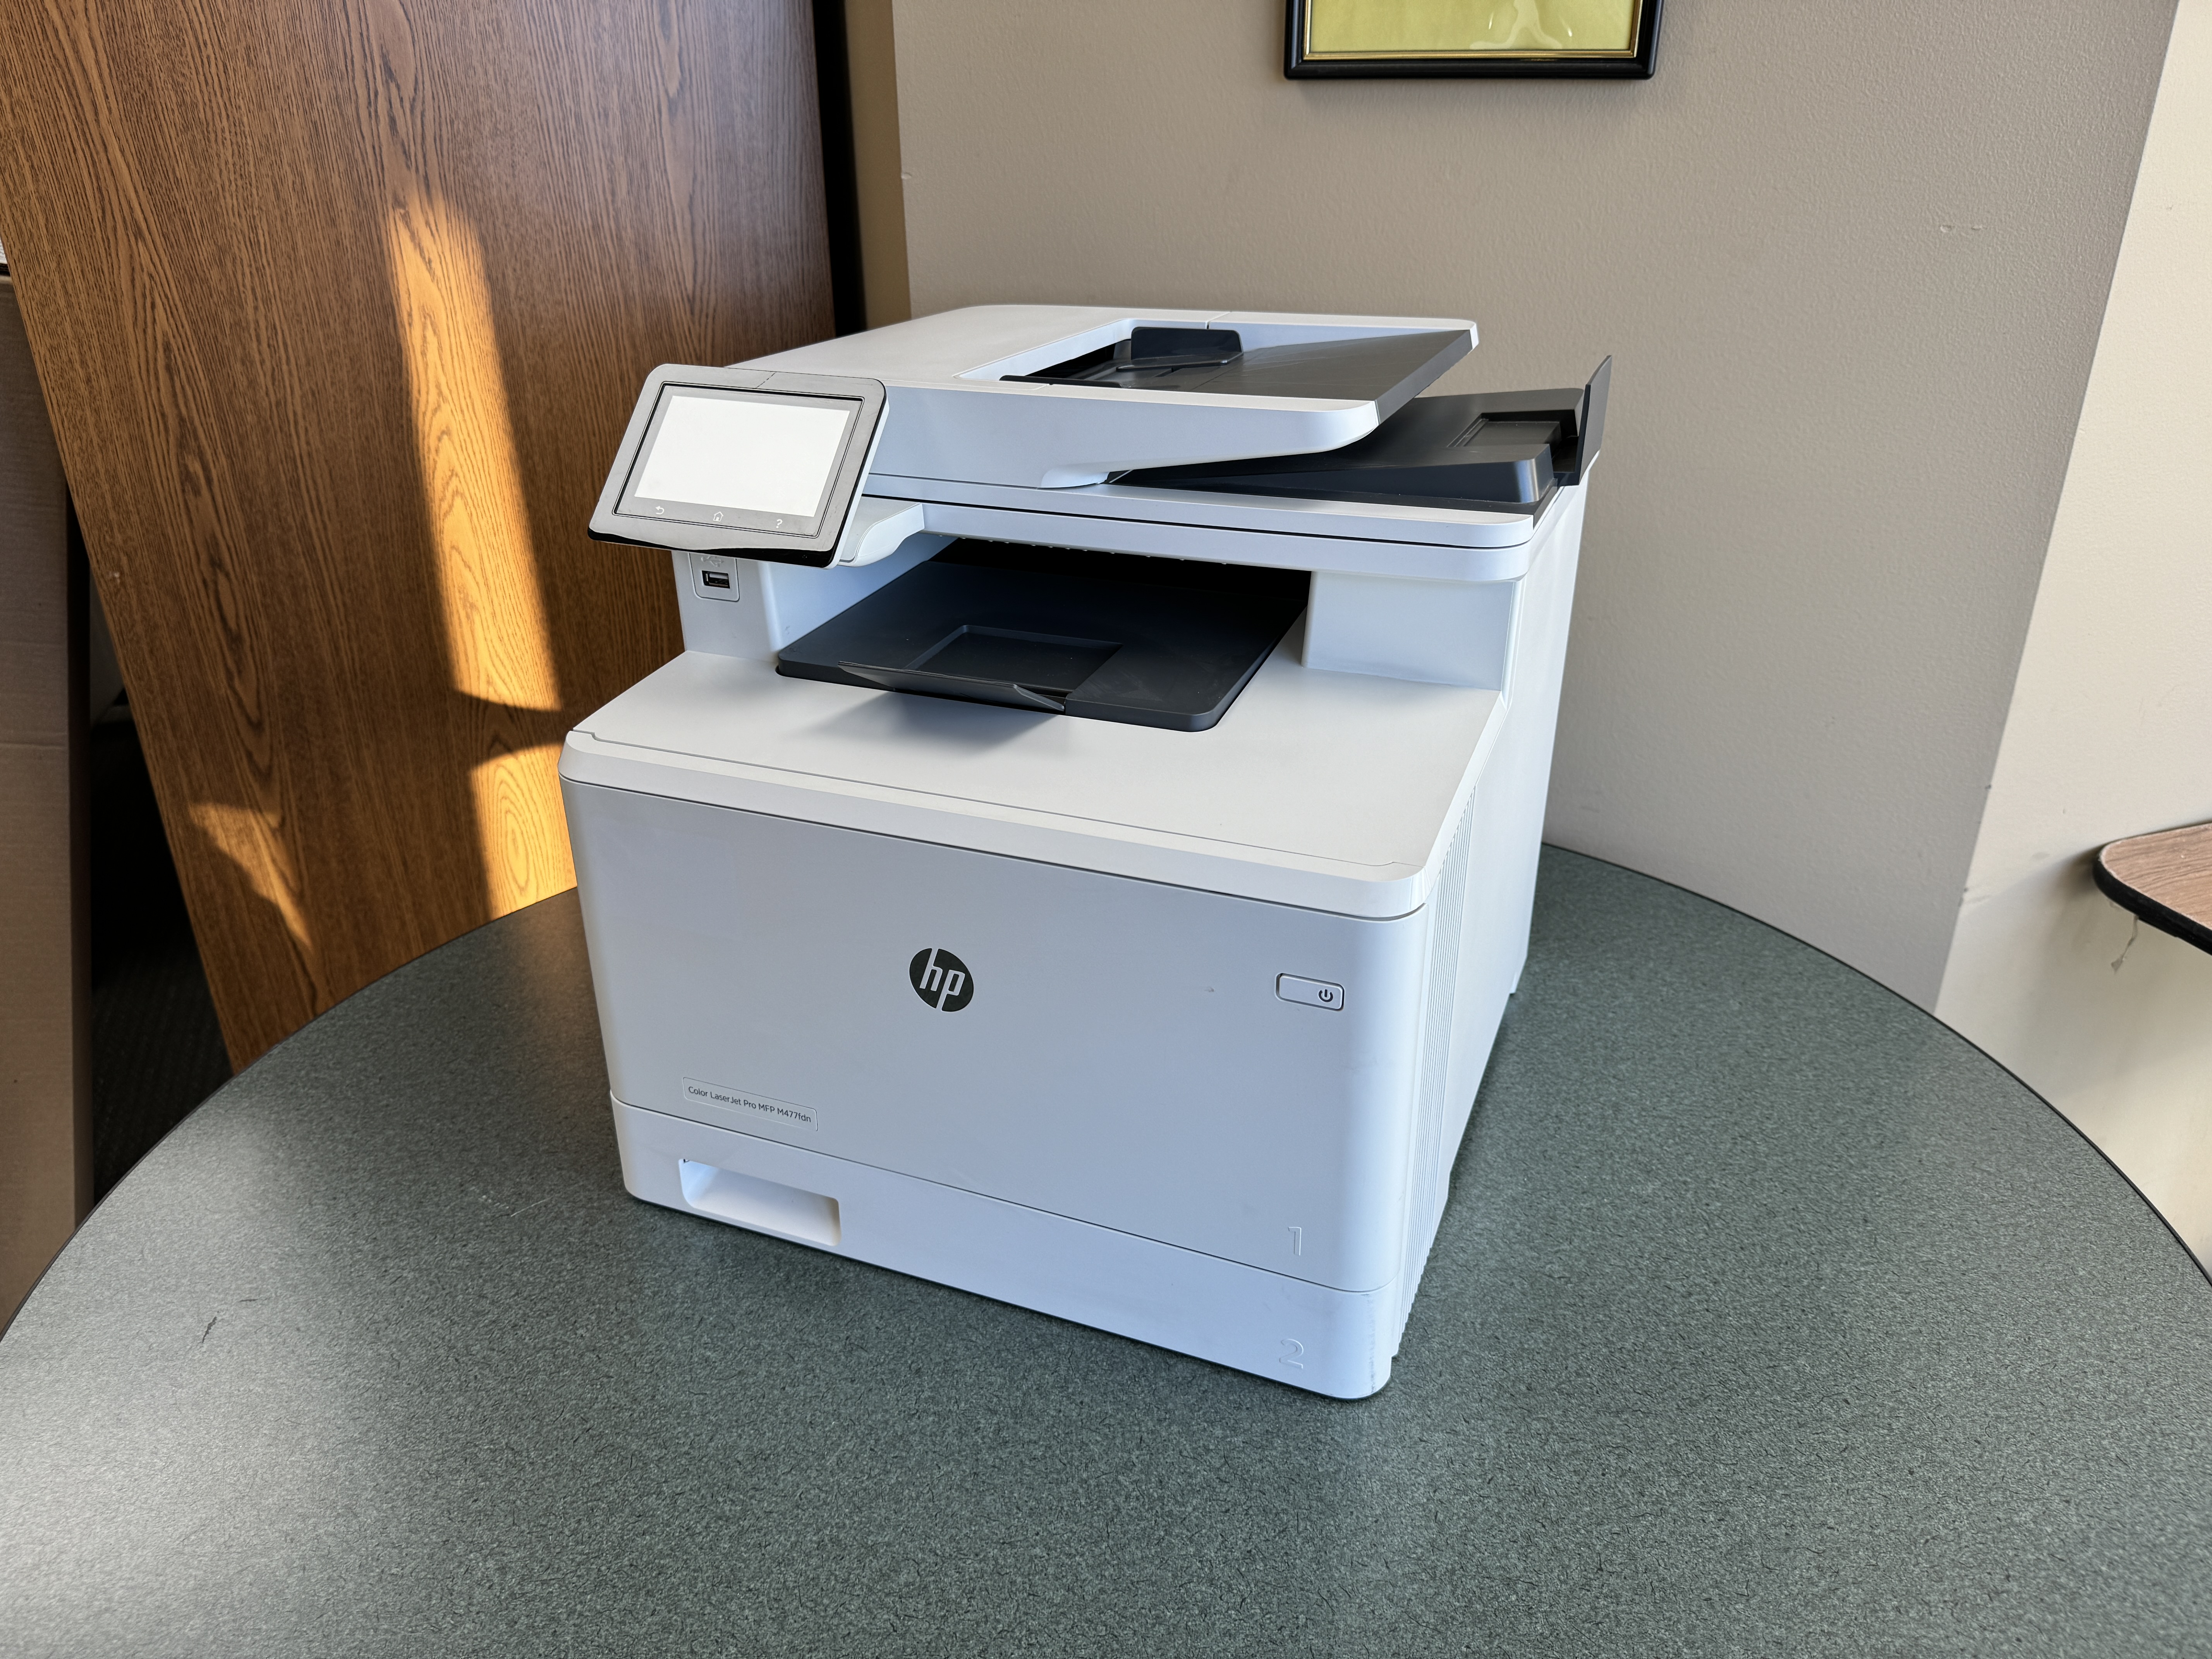 HP m477 desktop color copier. 